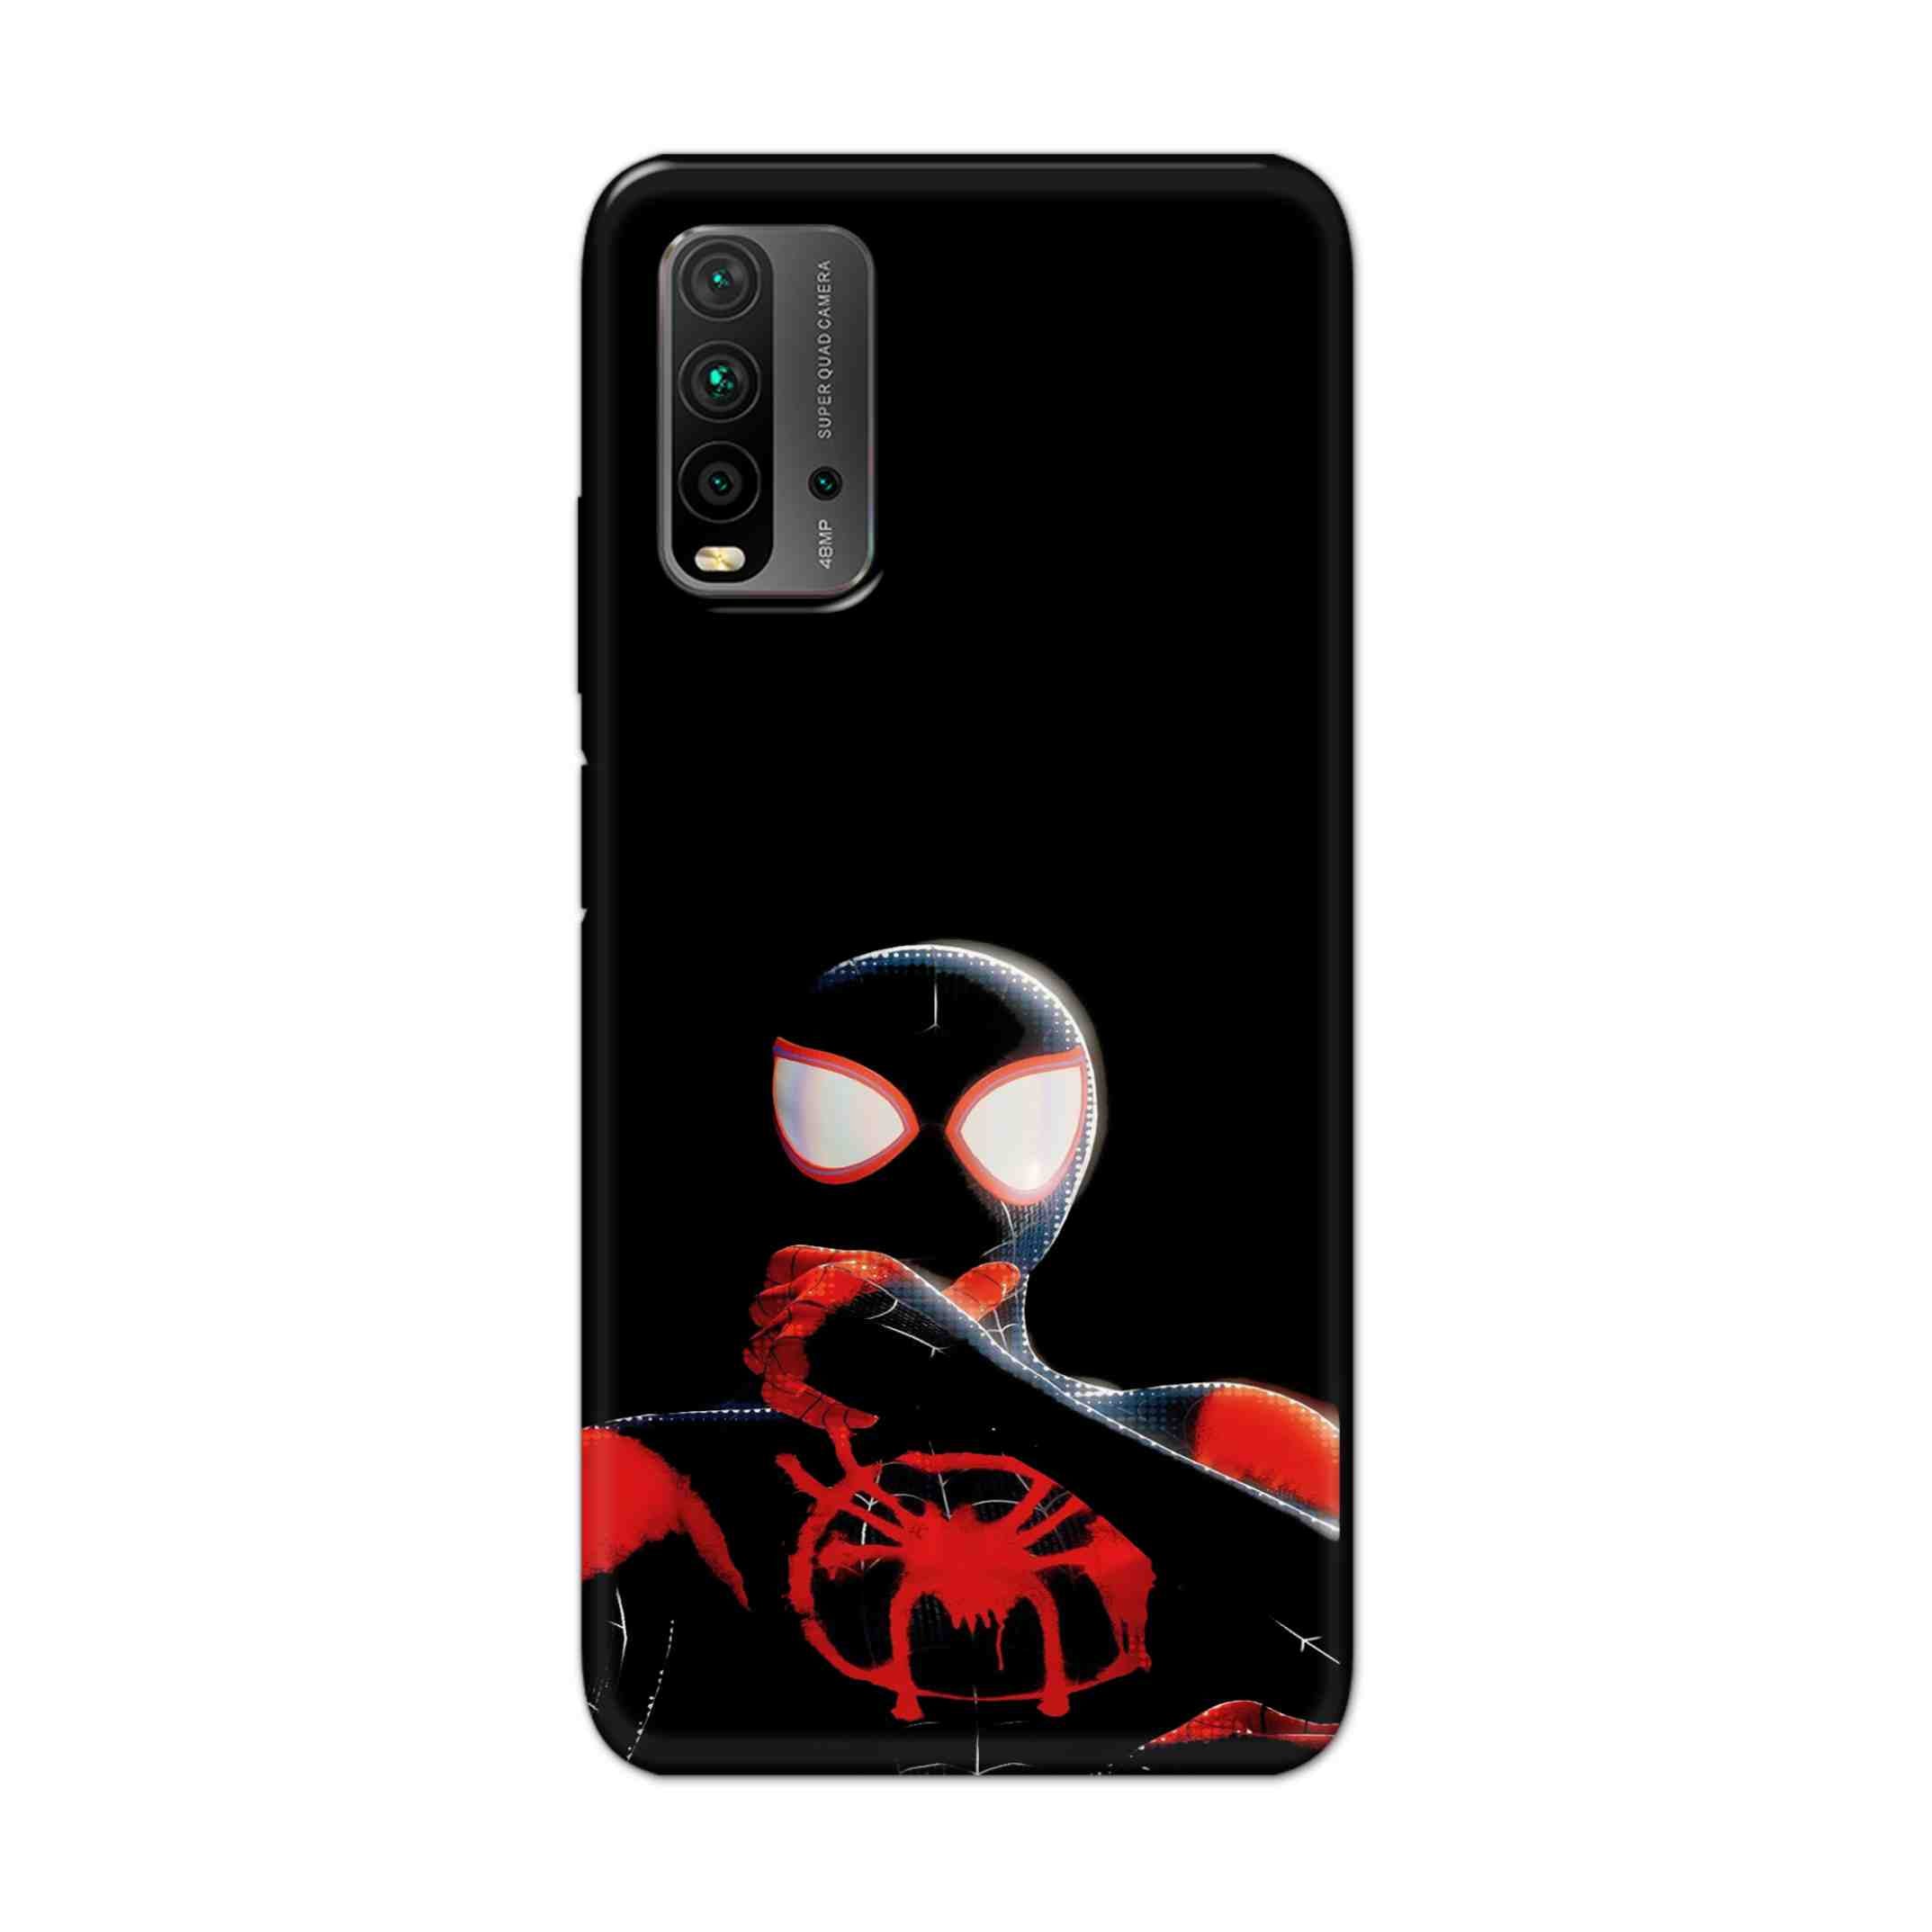 Buy Black Spiderman Hard Back Mobile Phone Case Cover For Redmi 9 Power Online